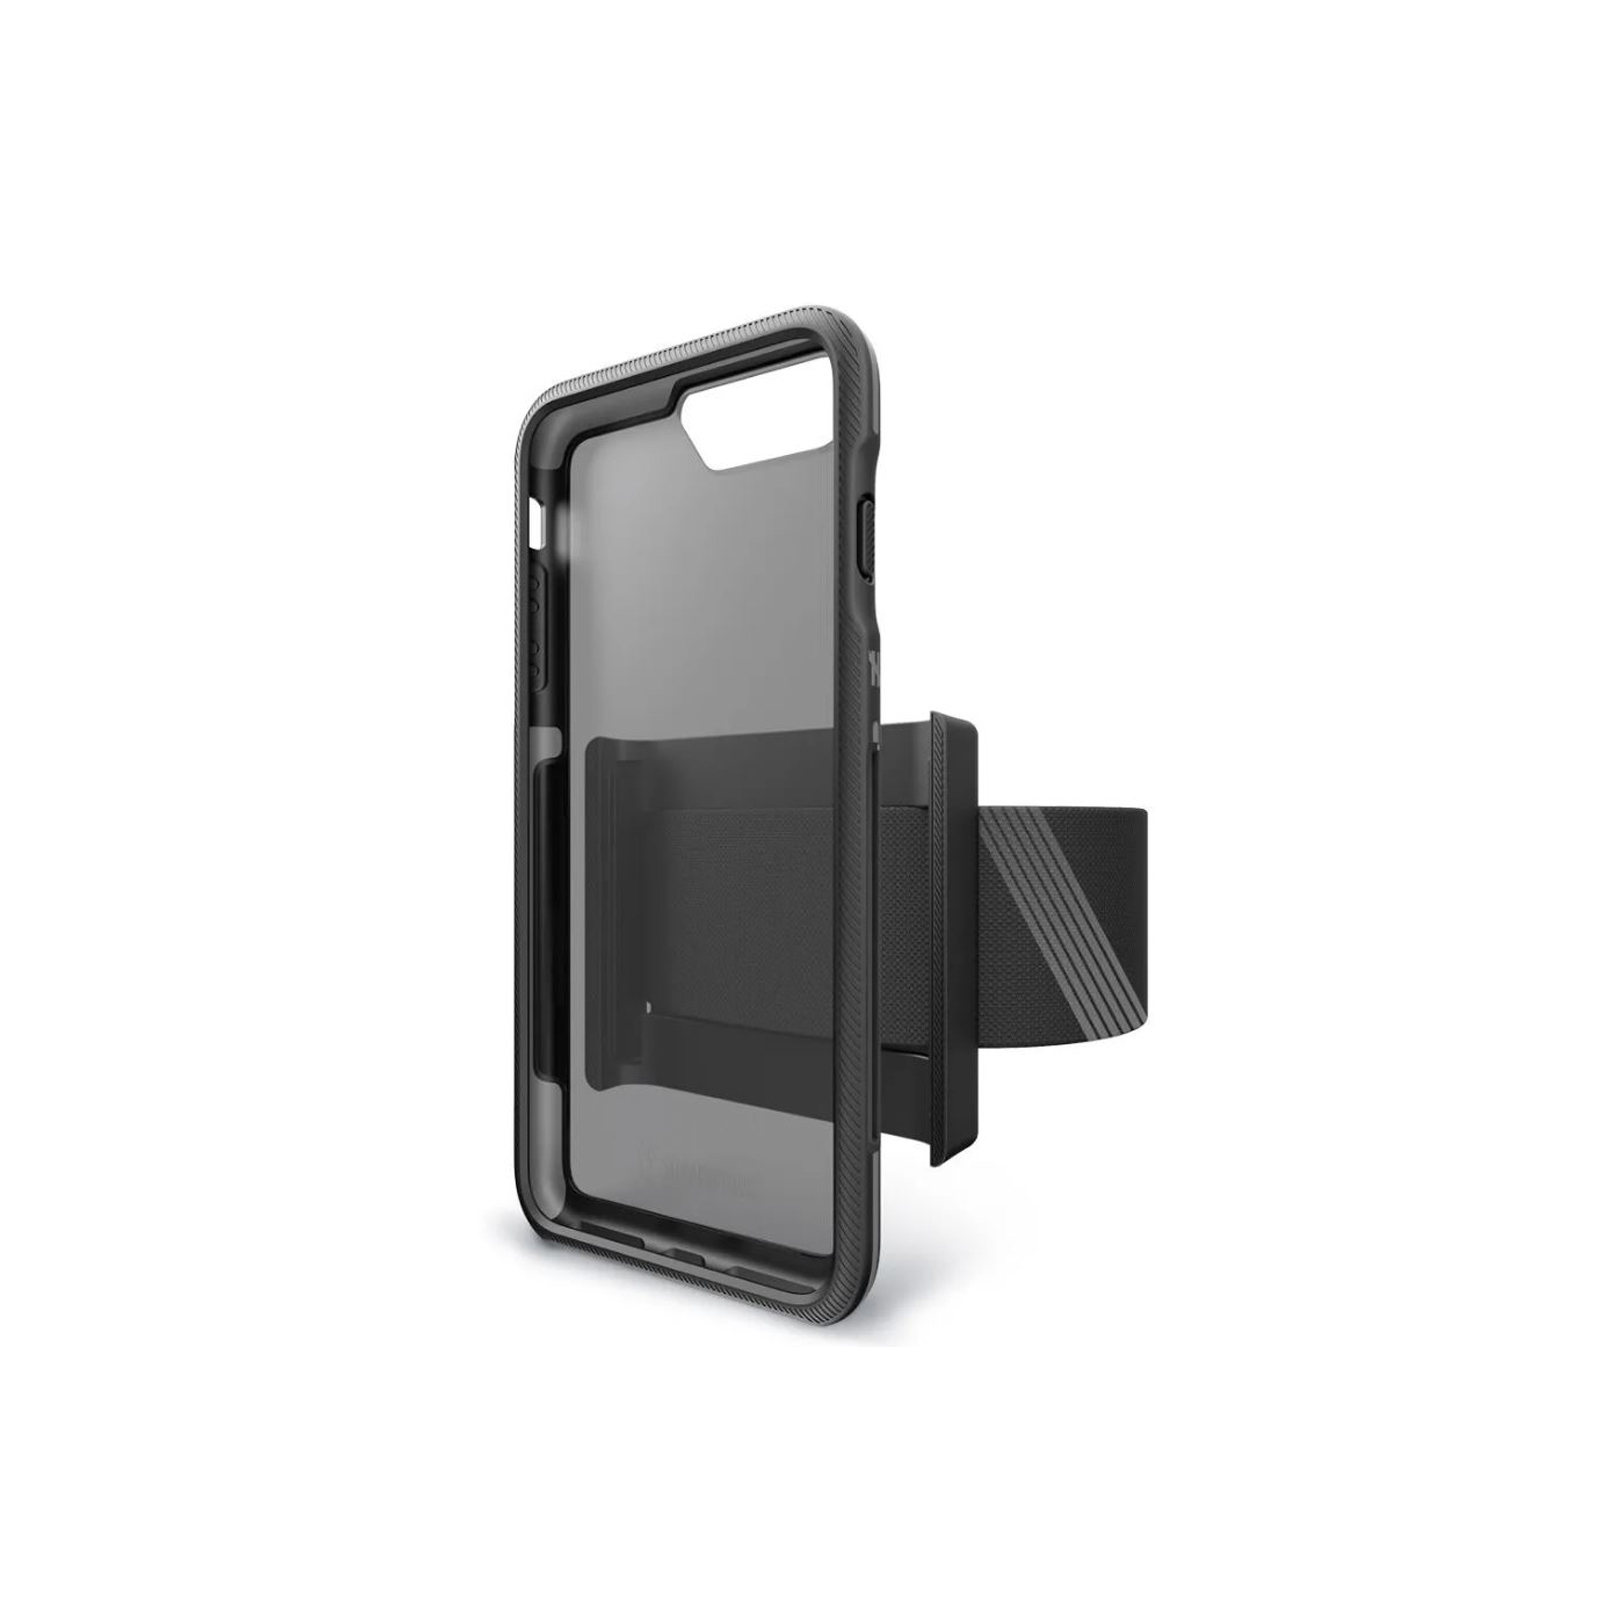 Trainr Pro iPhone 6 / 7 / 8 Case [Black / Gray]